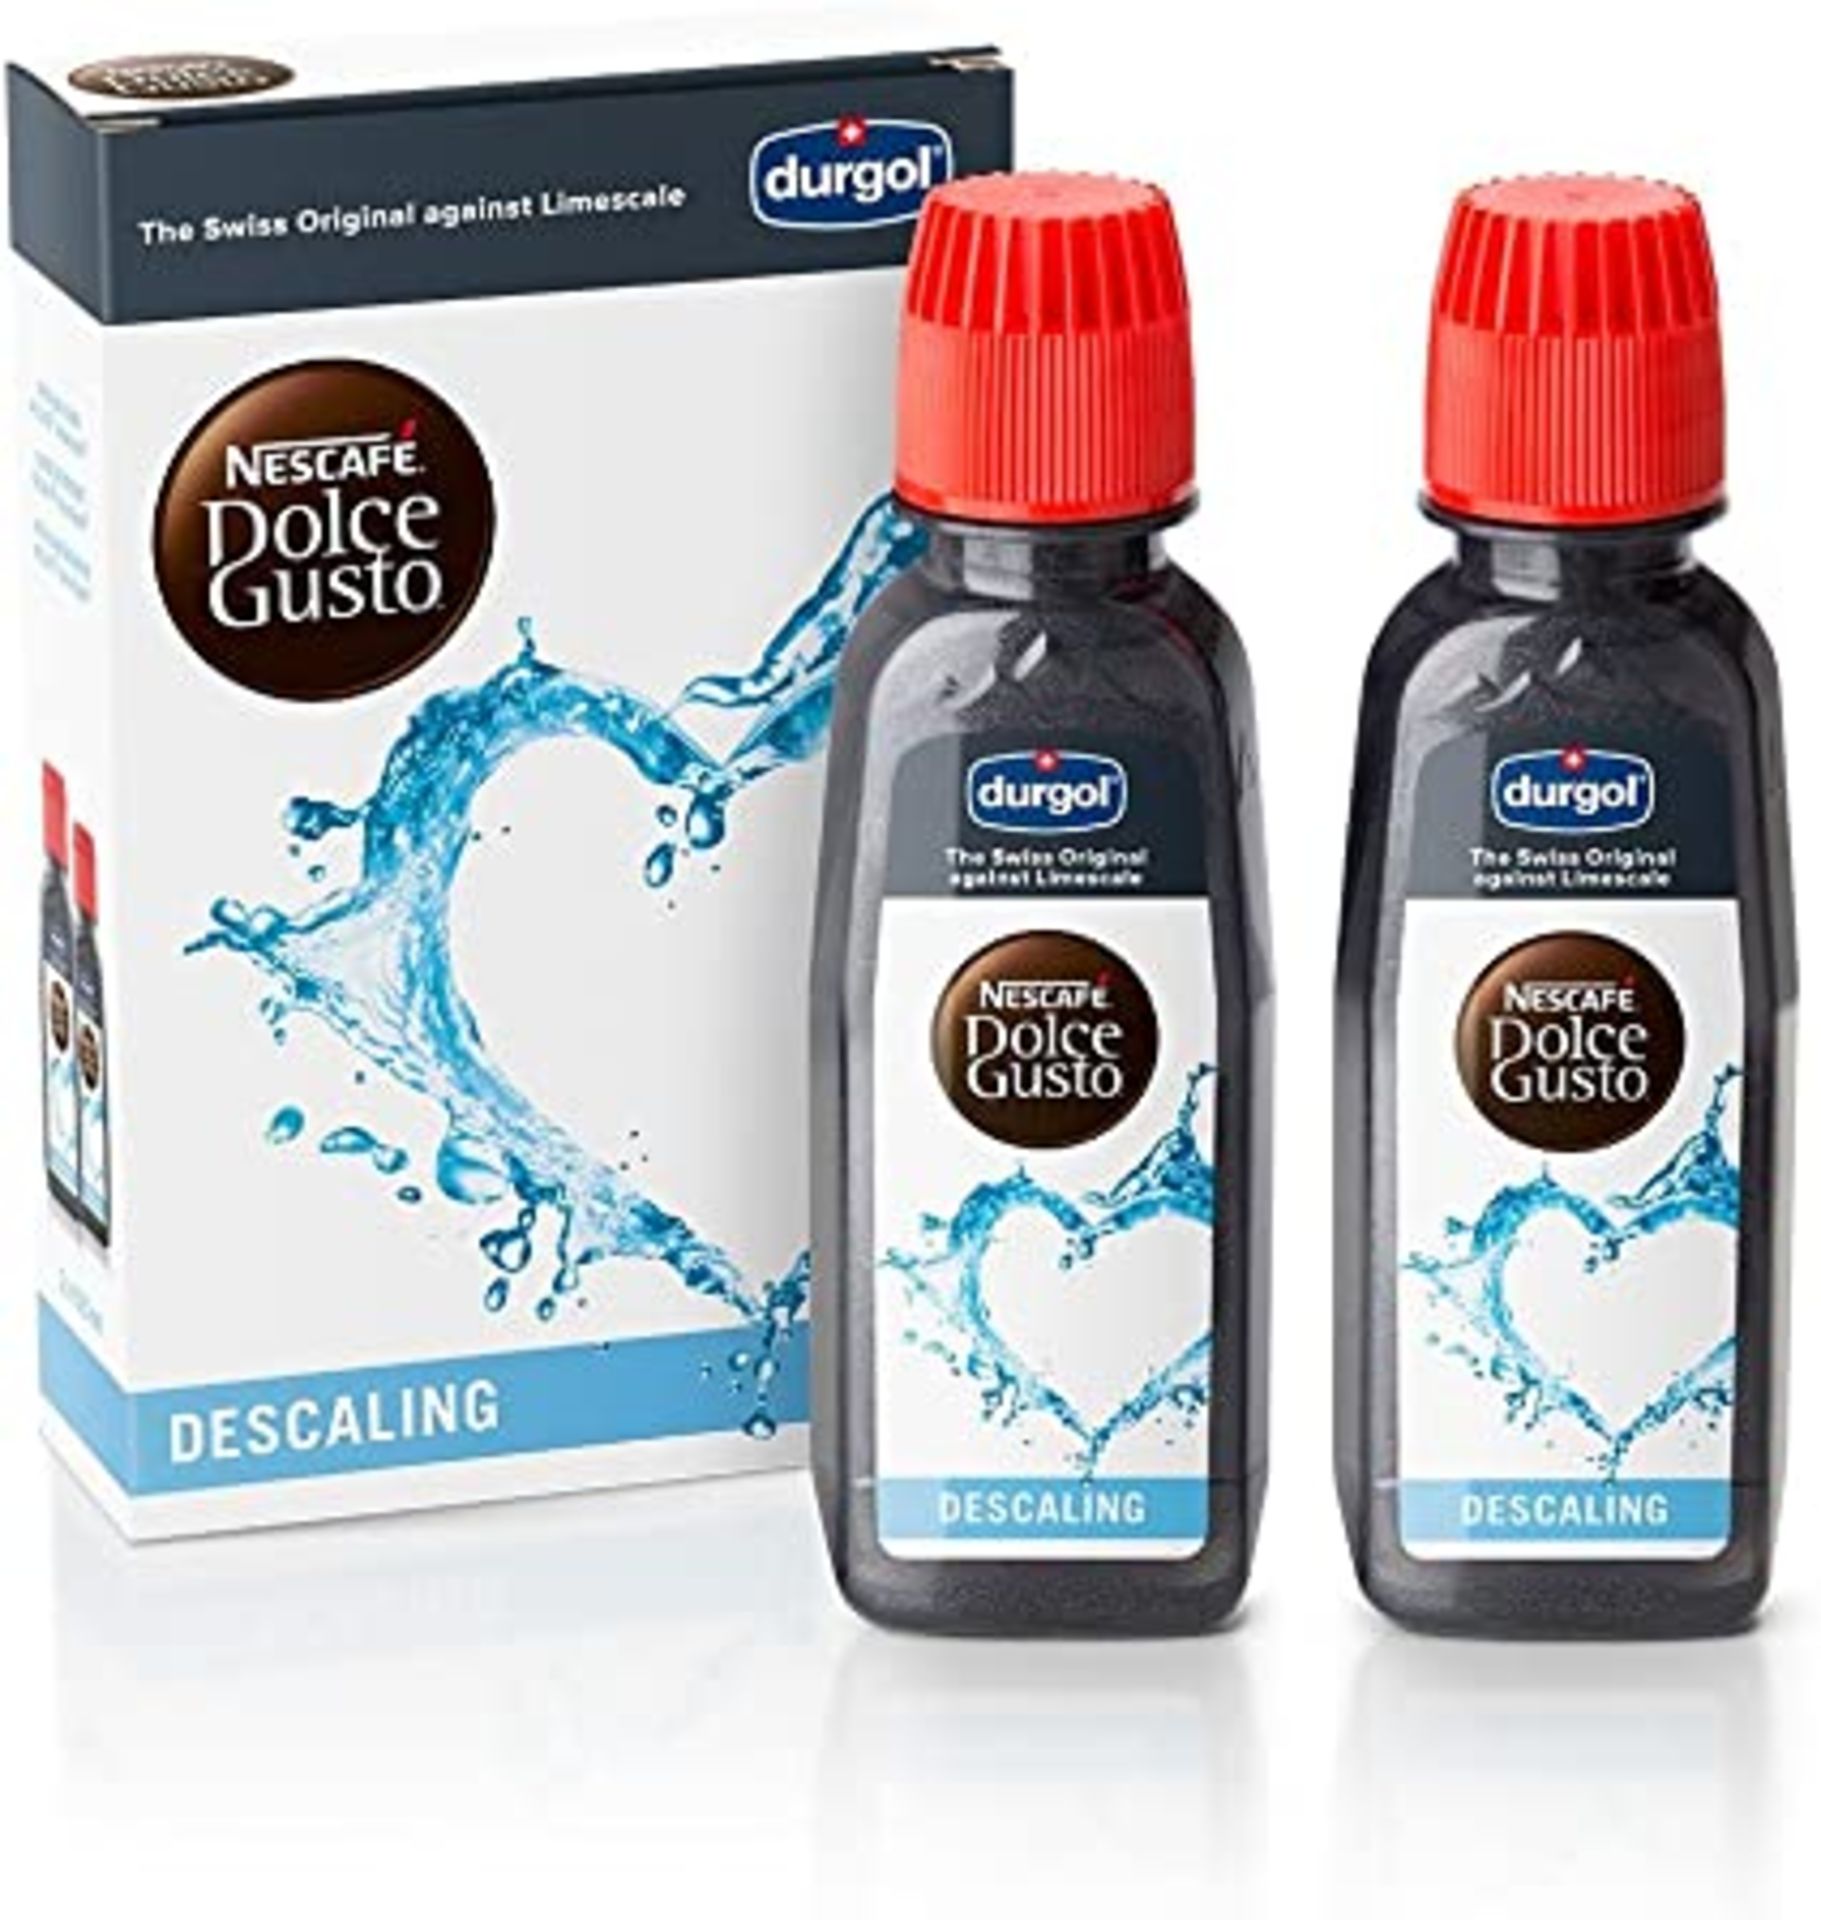 RRP - £12.83 Official Nescafe Dolce Gusto Durgol Descaling Kit - 2 Bottles x 125ml - Water Descaler